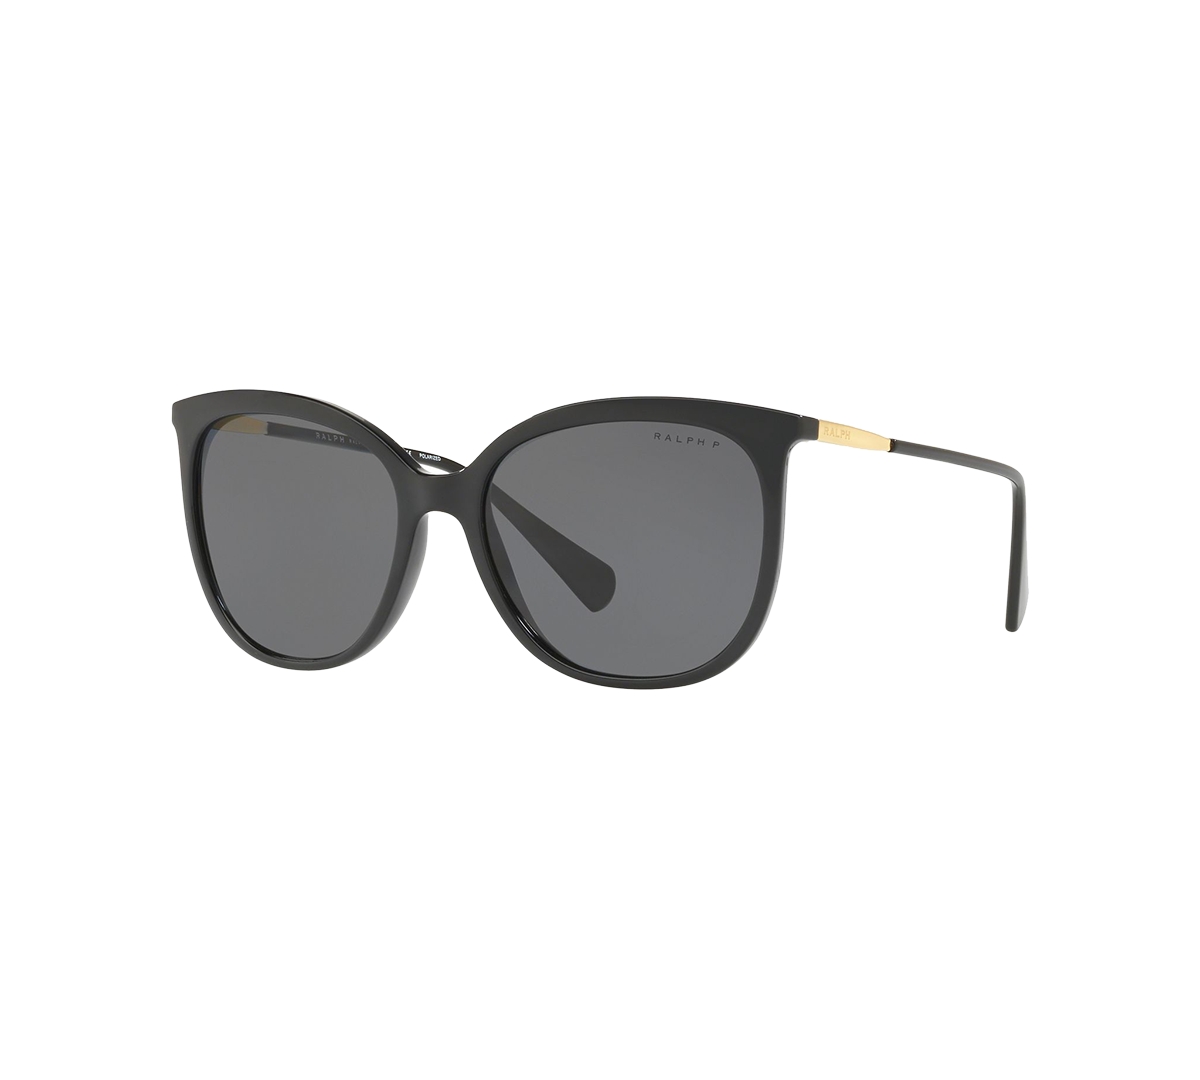 Ralph Lauren Sunglasses, RA5248 56 - BLACK / DARK GREY POLAR